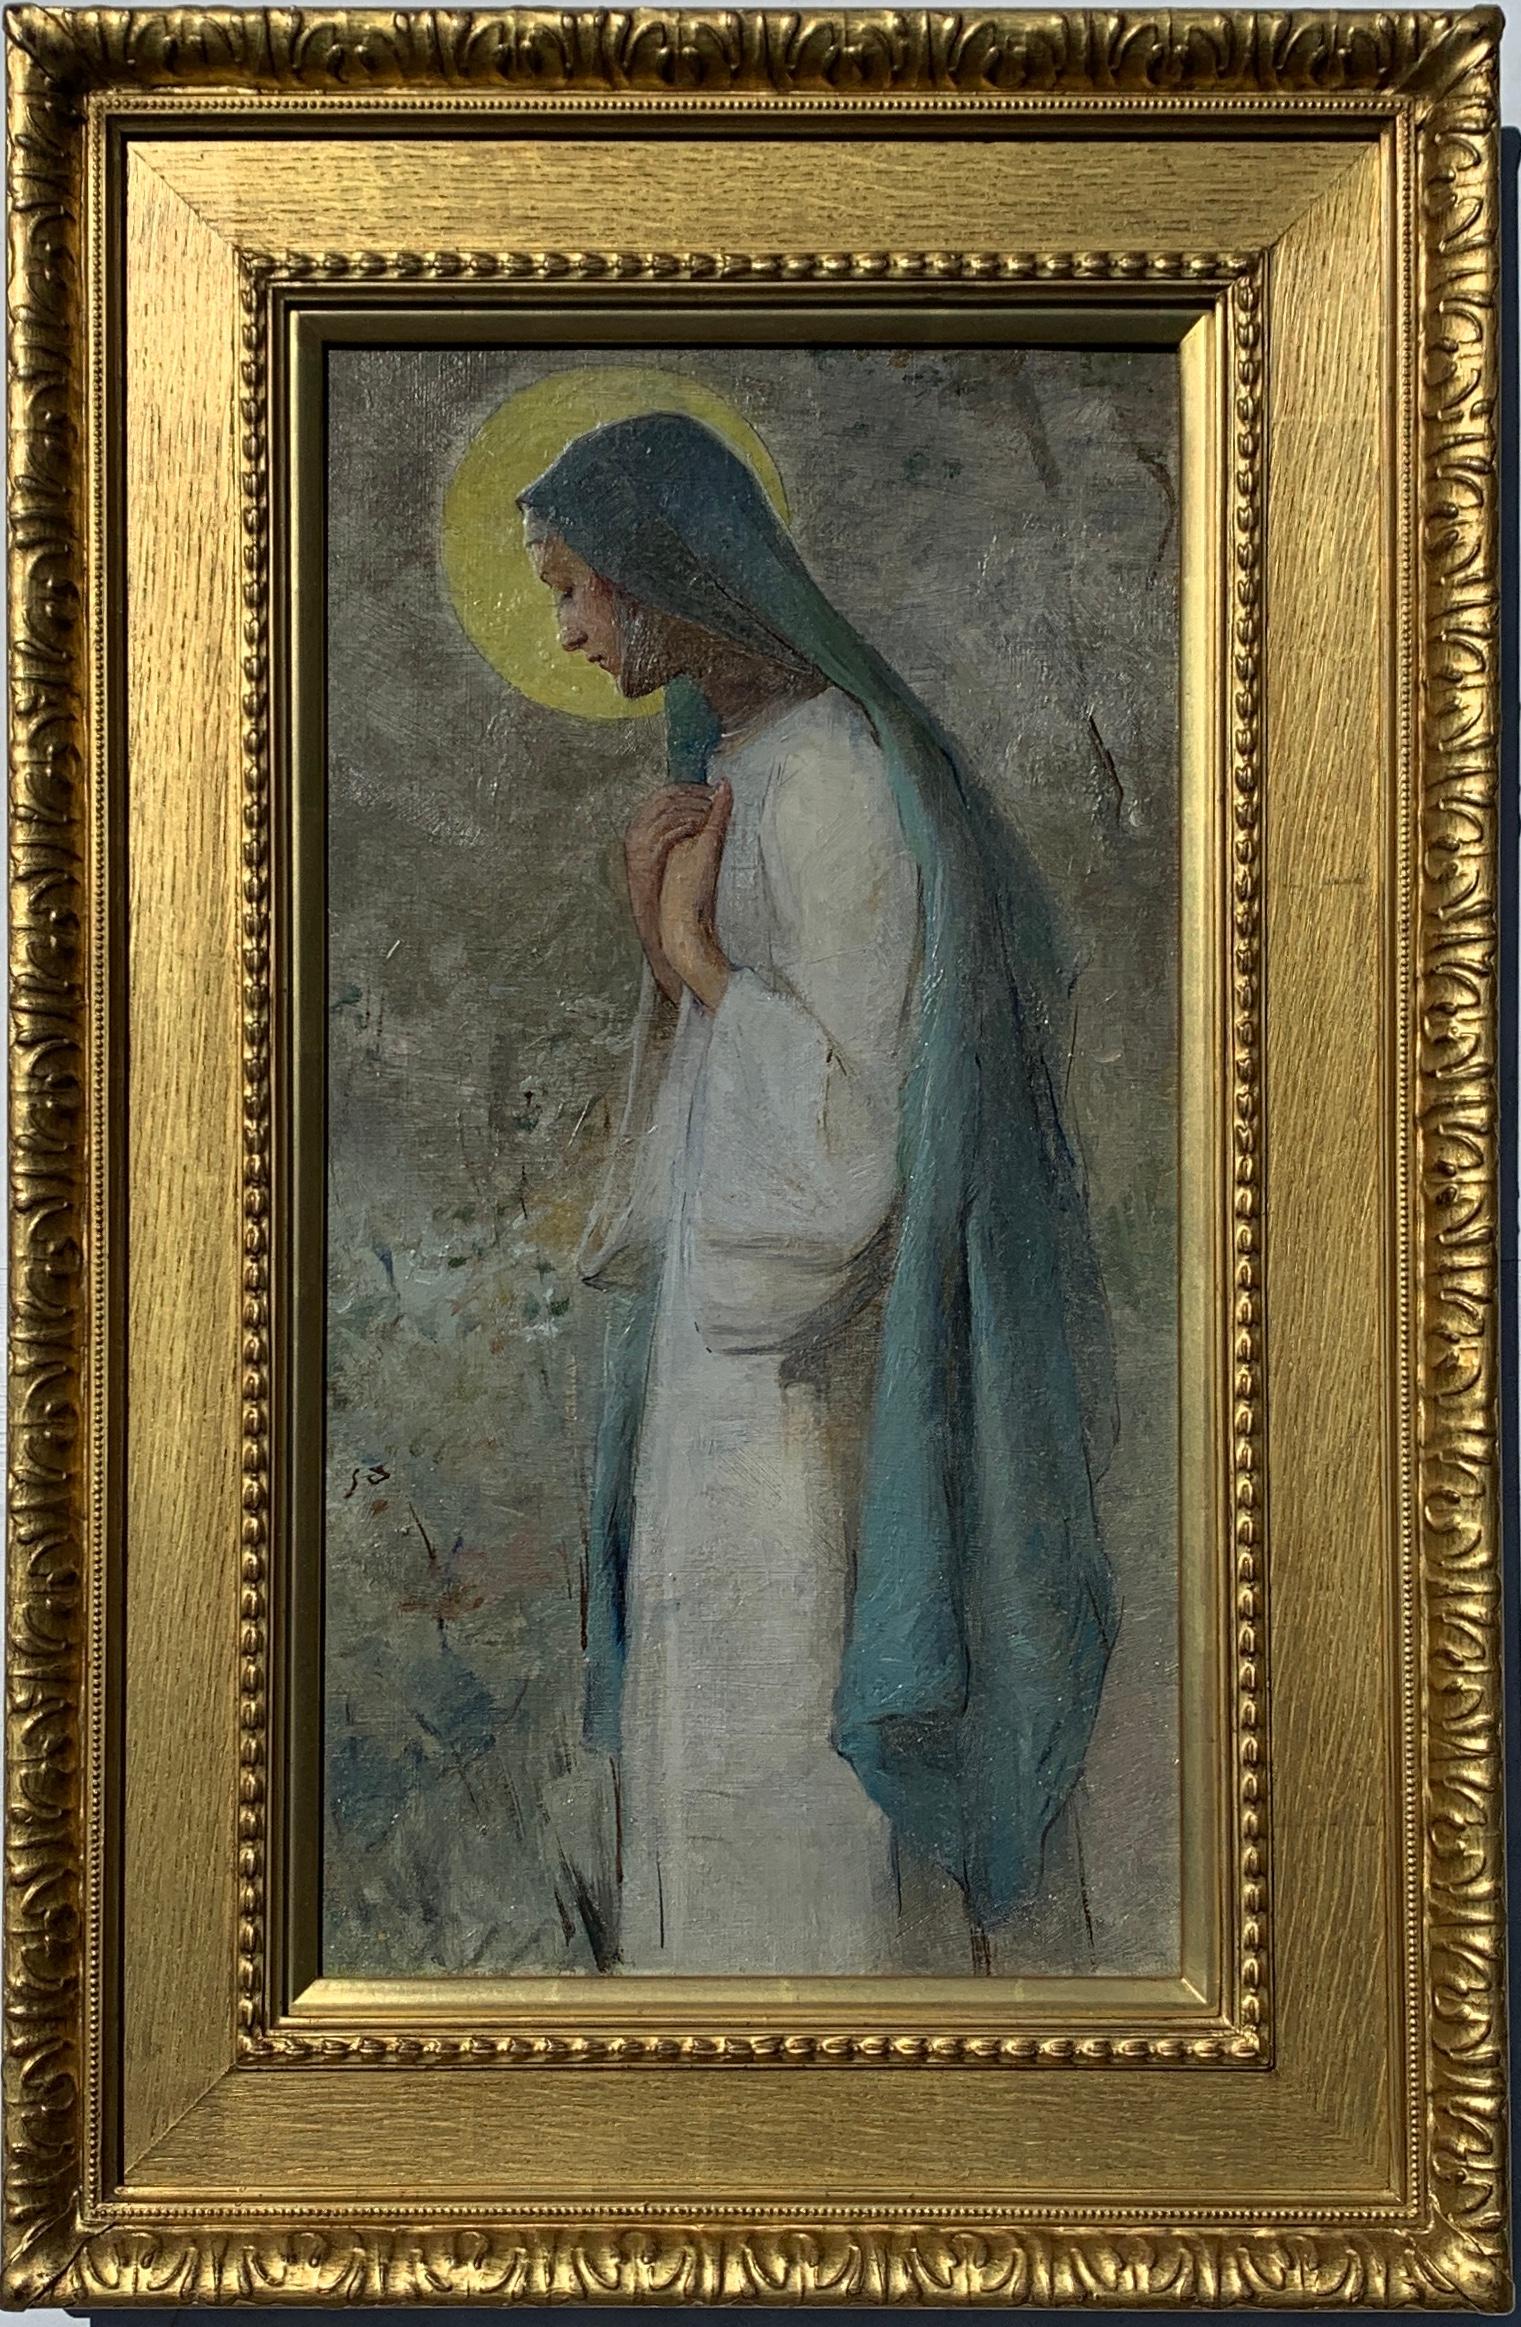 CHENPAT1002 charming nun girl portrait hand painted oil painting art on canvas 